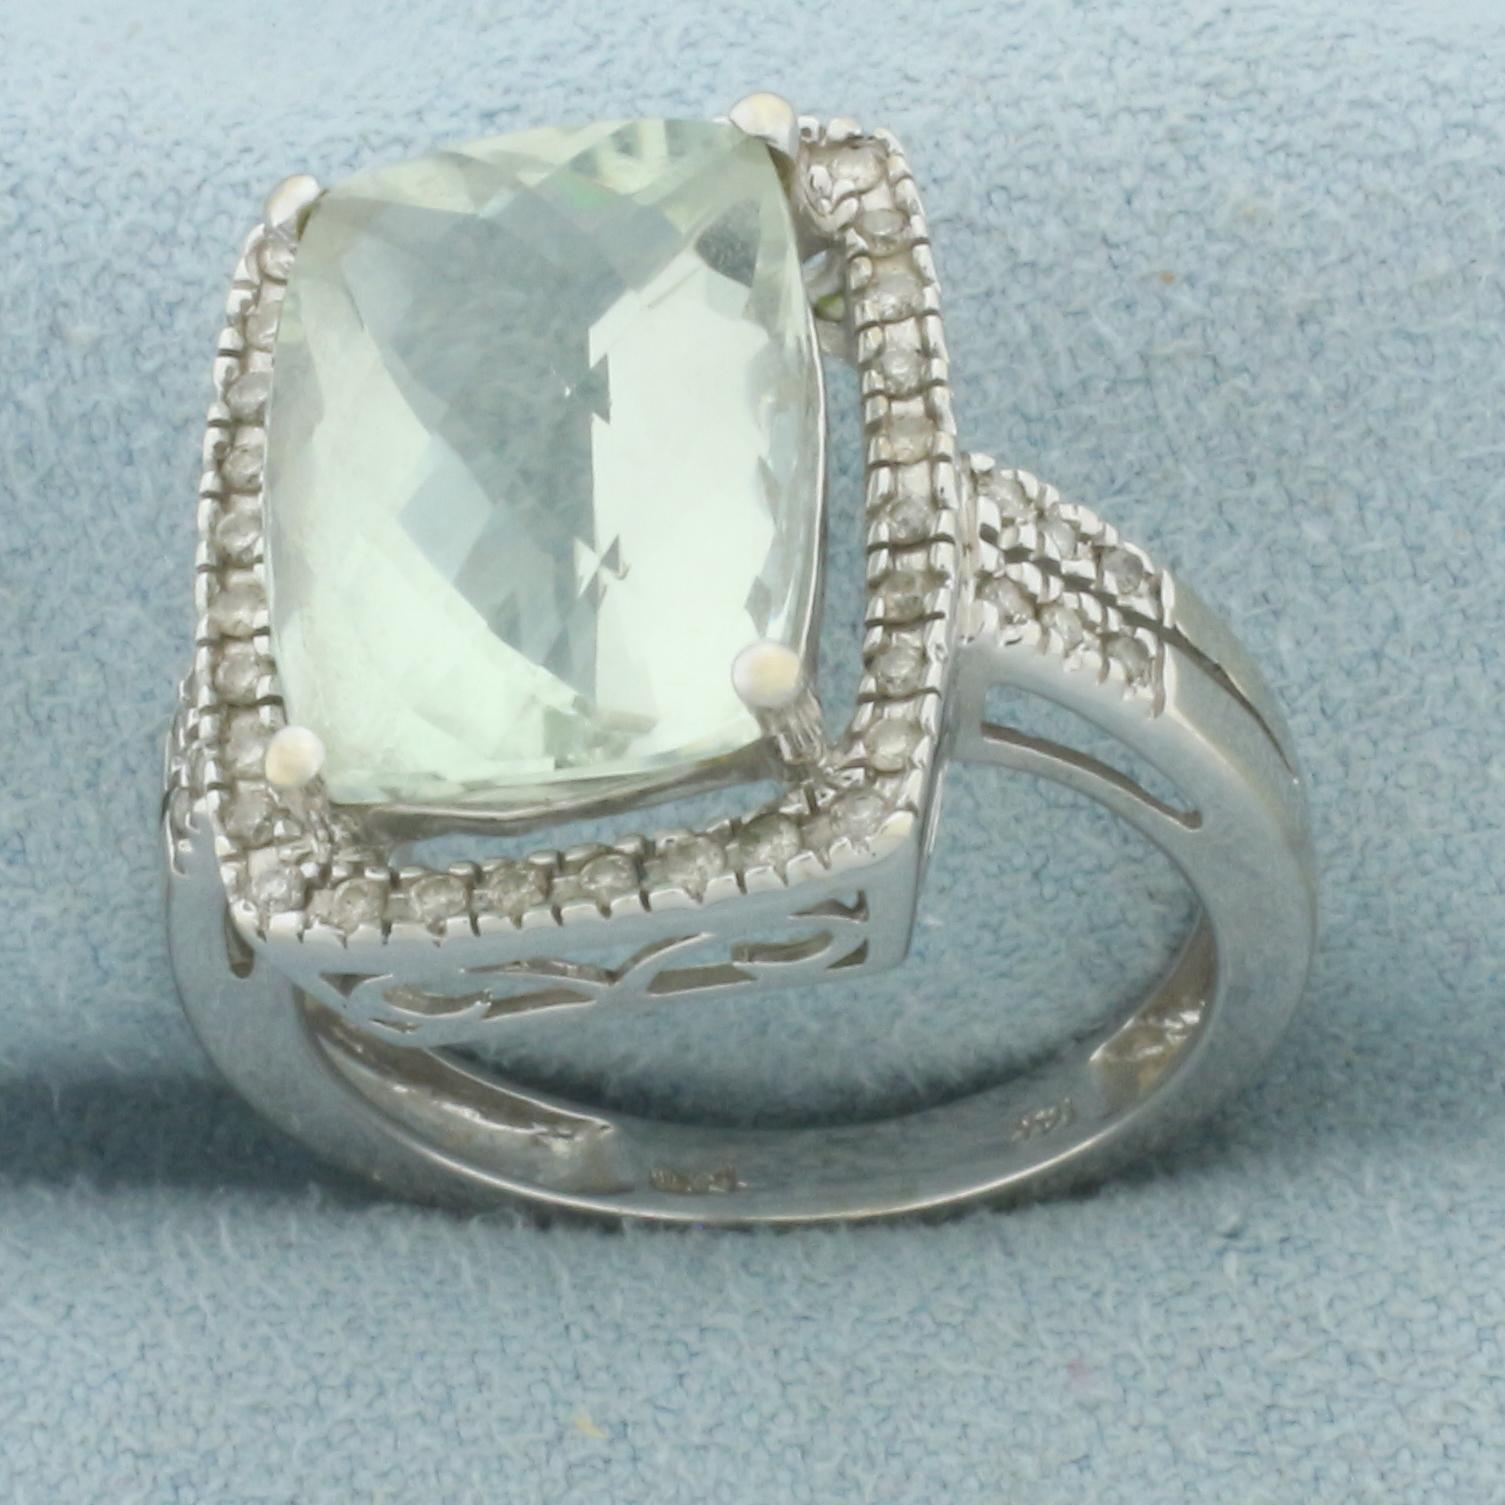 Aquamarine And Diamond Halo Ring In 14k White Gold